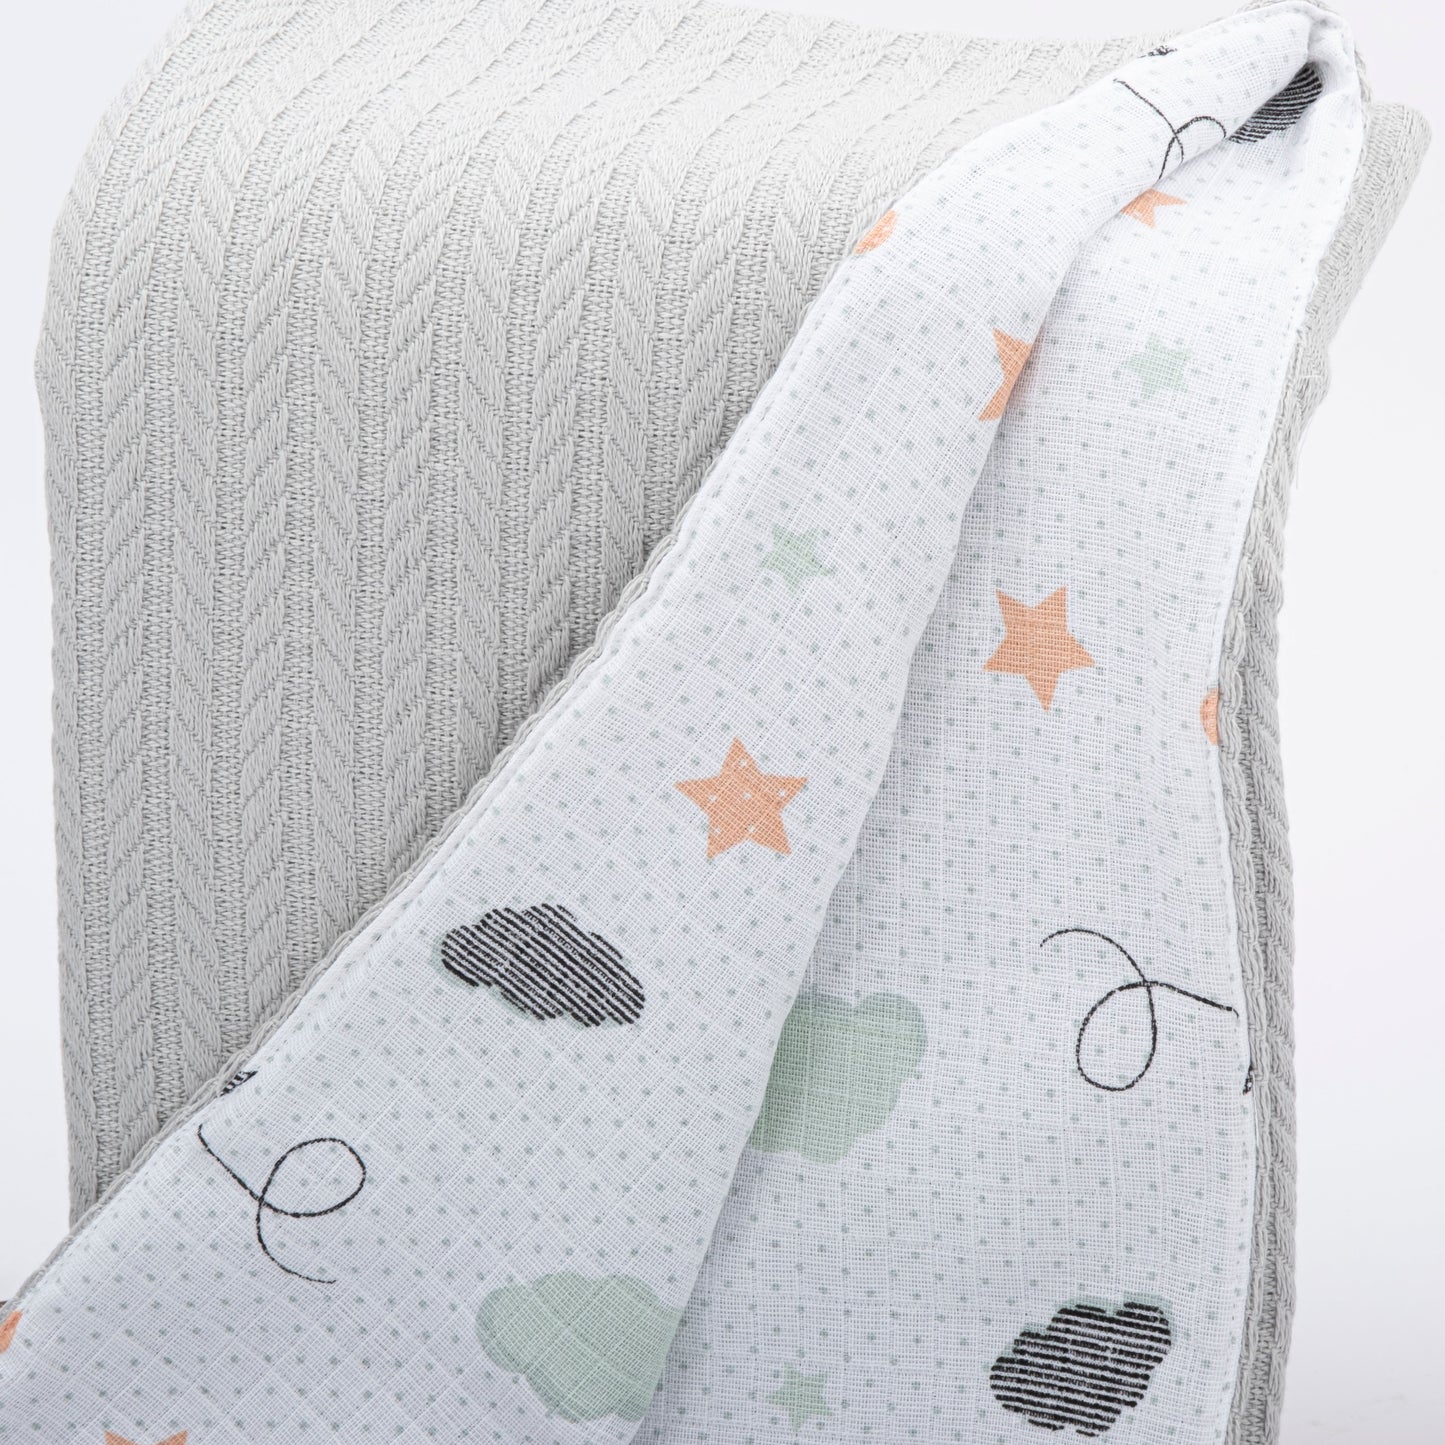 Pique Blanket - Double Side - Gray Knit - Birds